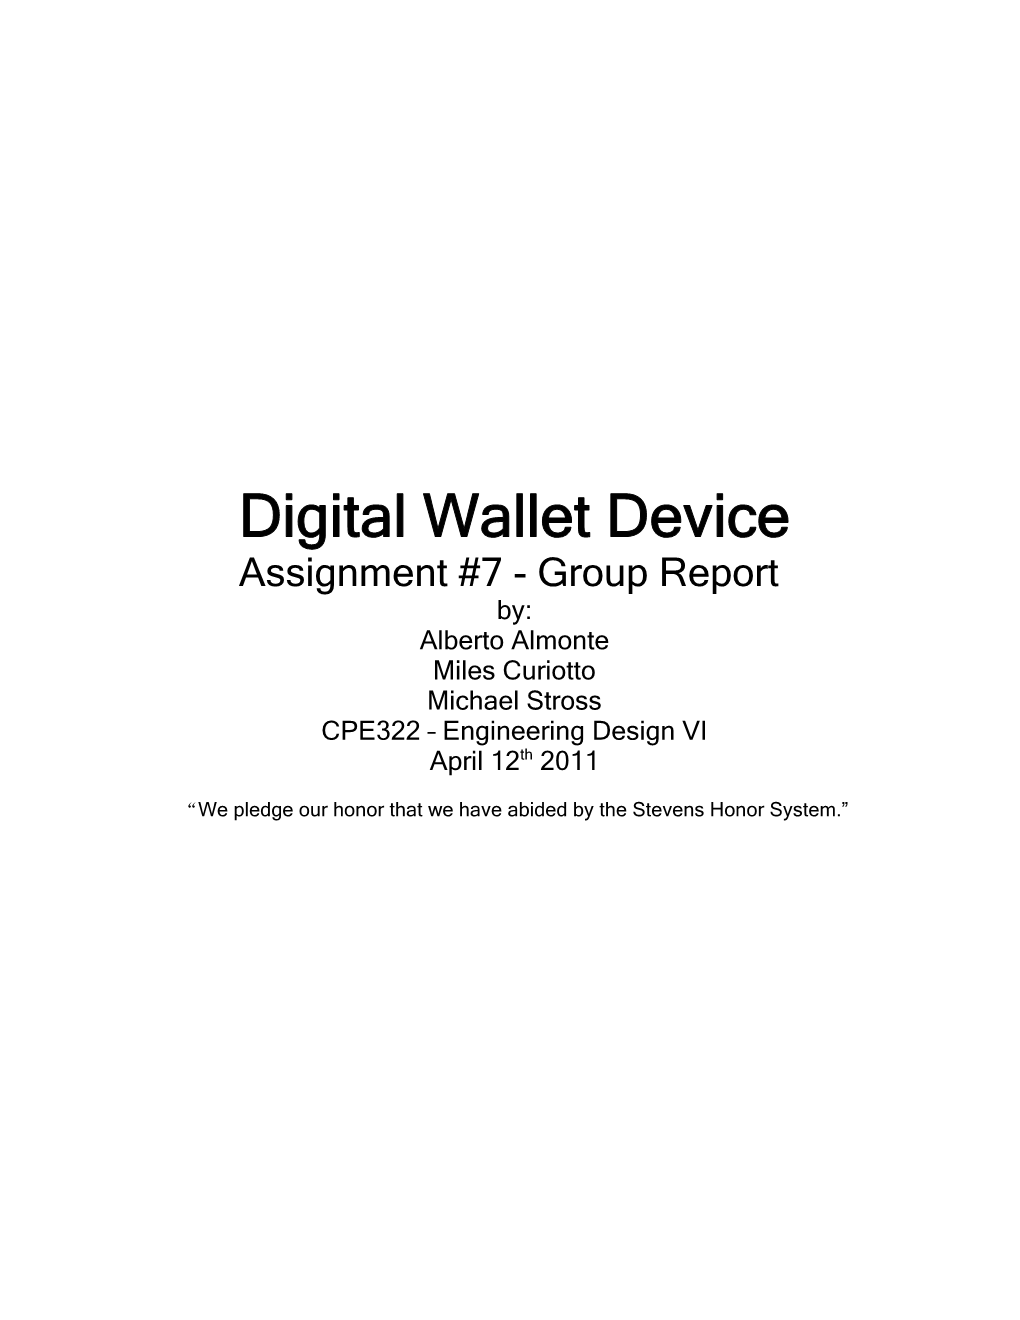 Almonte Digital Wallet Device HW7 Pg 11